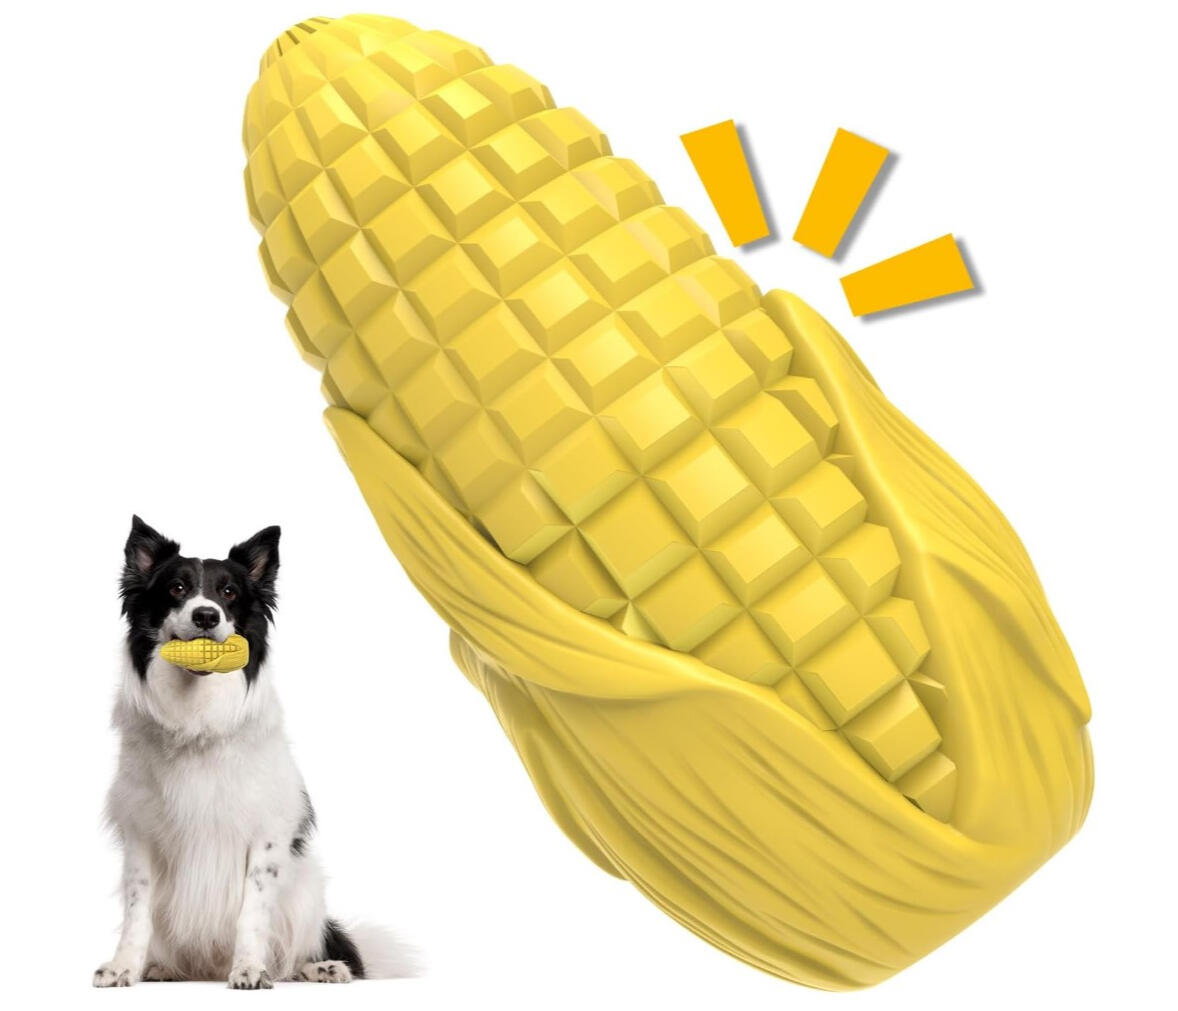 Indestructible Dog Toy - Yellow Corn